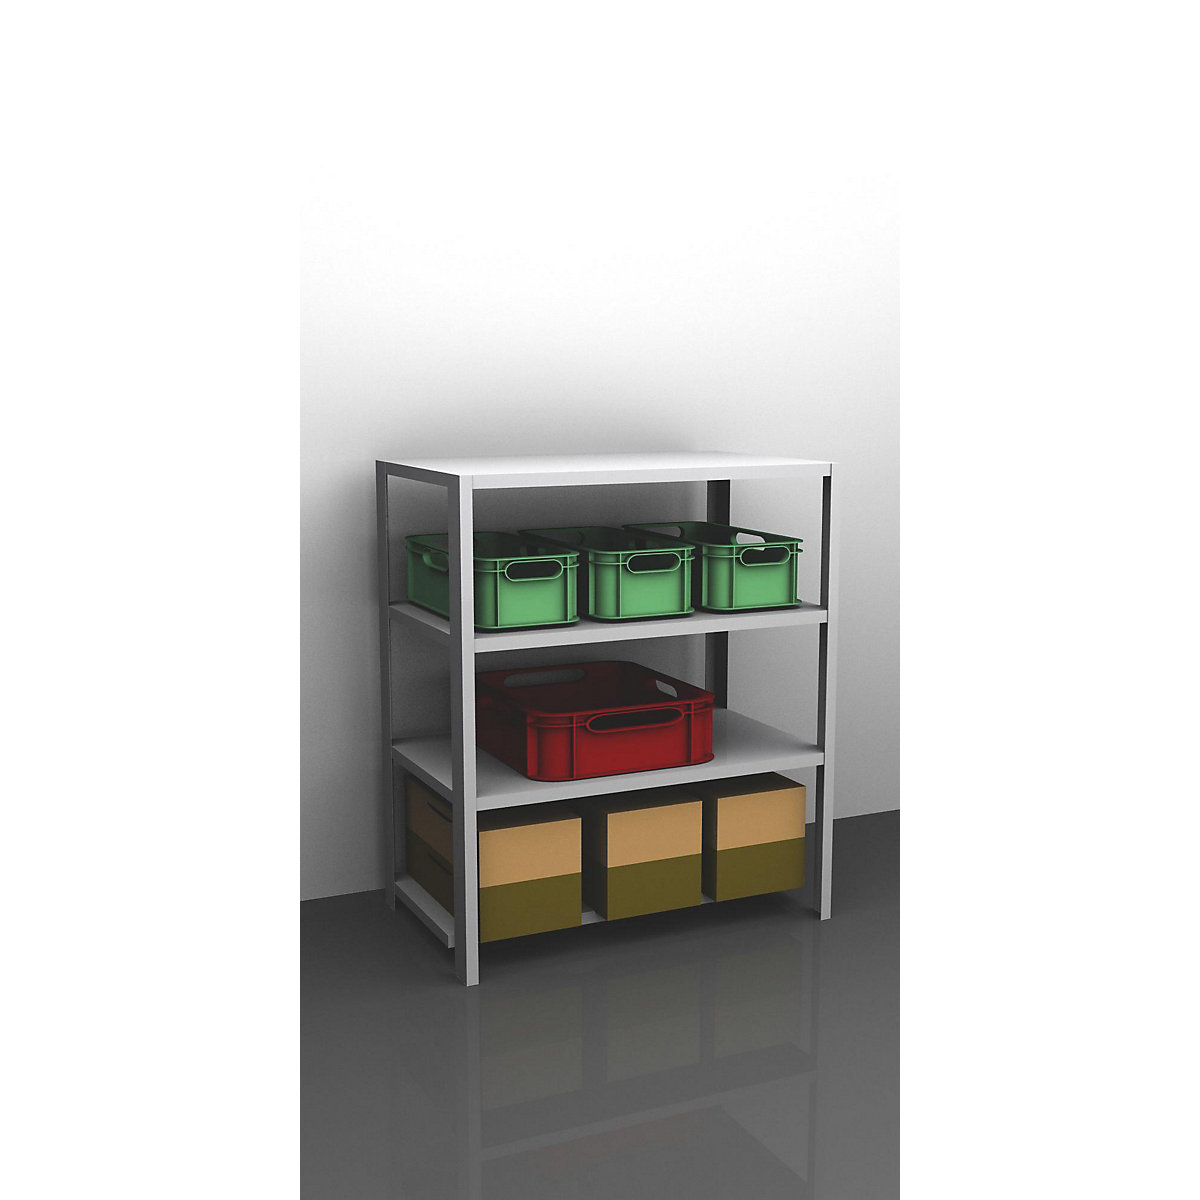 Bolt-together shelf unit, light duty, zinc plated – eurokraft pro, shelf unit height 1500 mm, shelf width 1300 mm, depth 800 mm, standard shelf unit-11